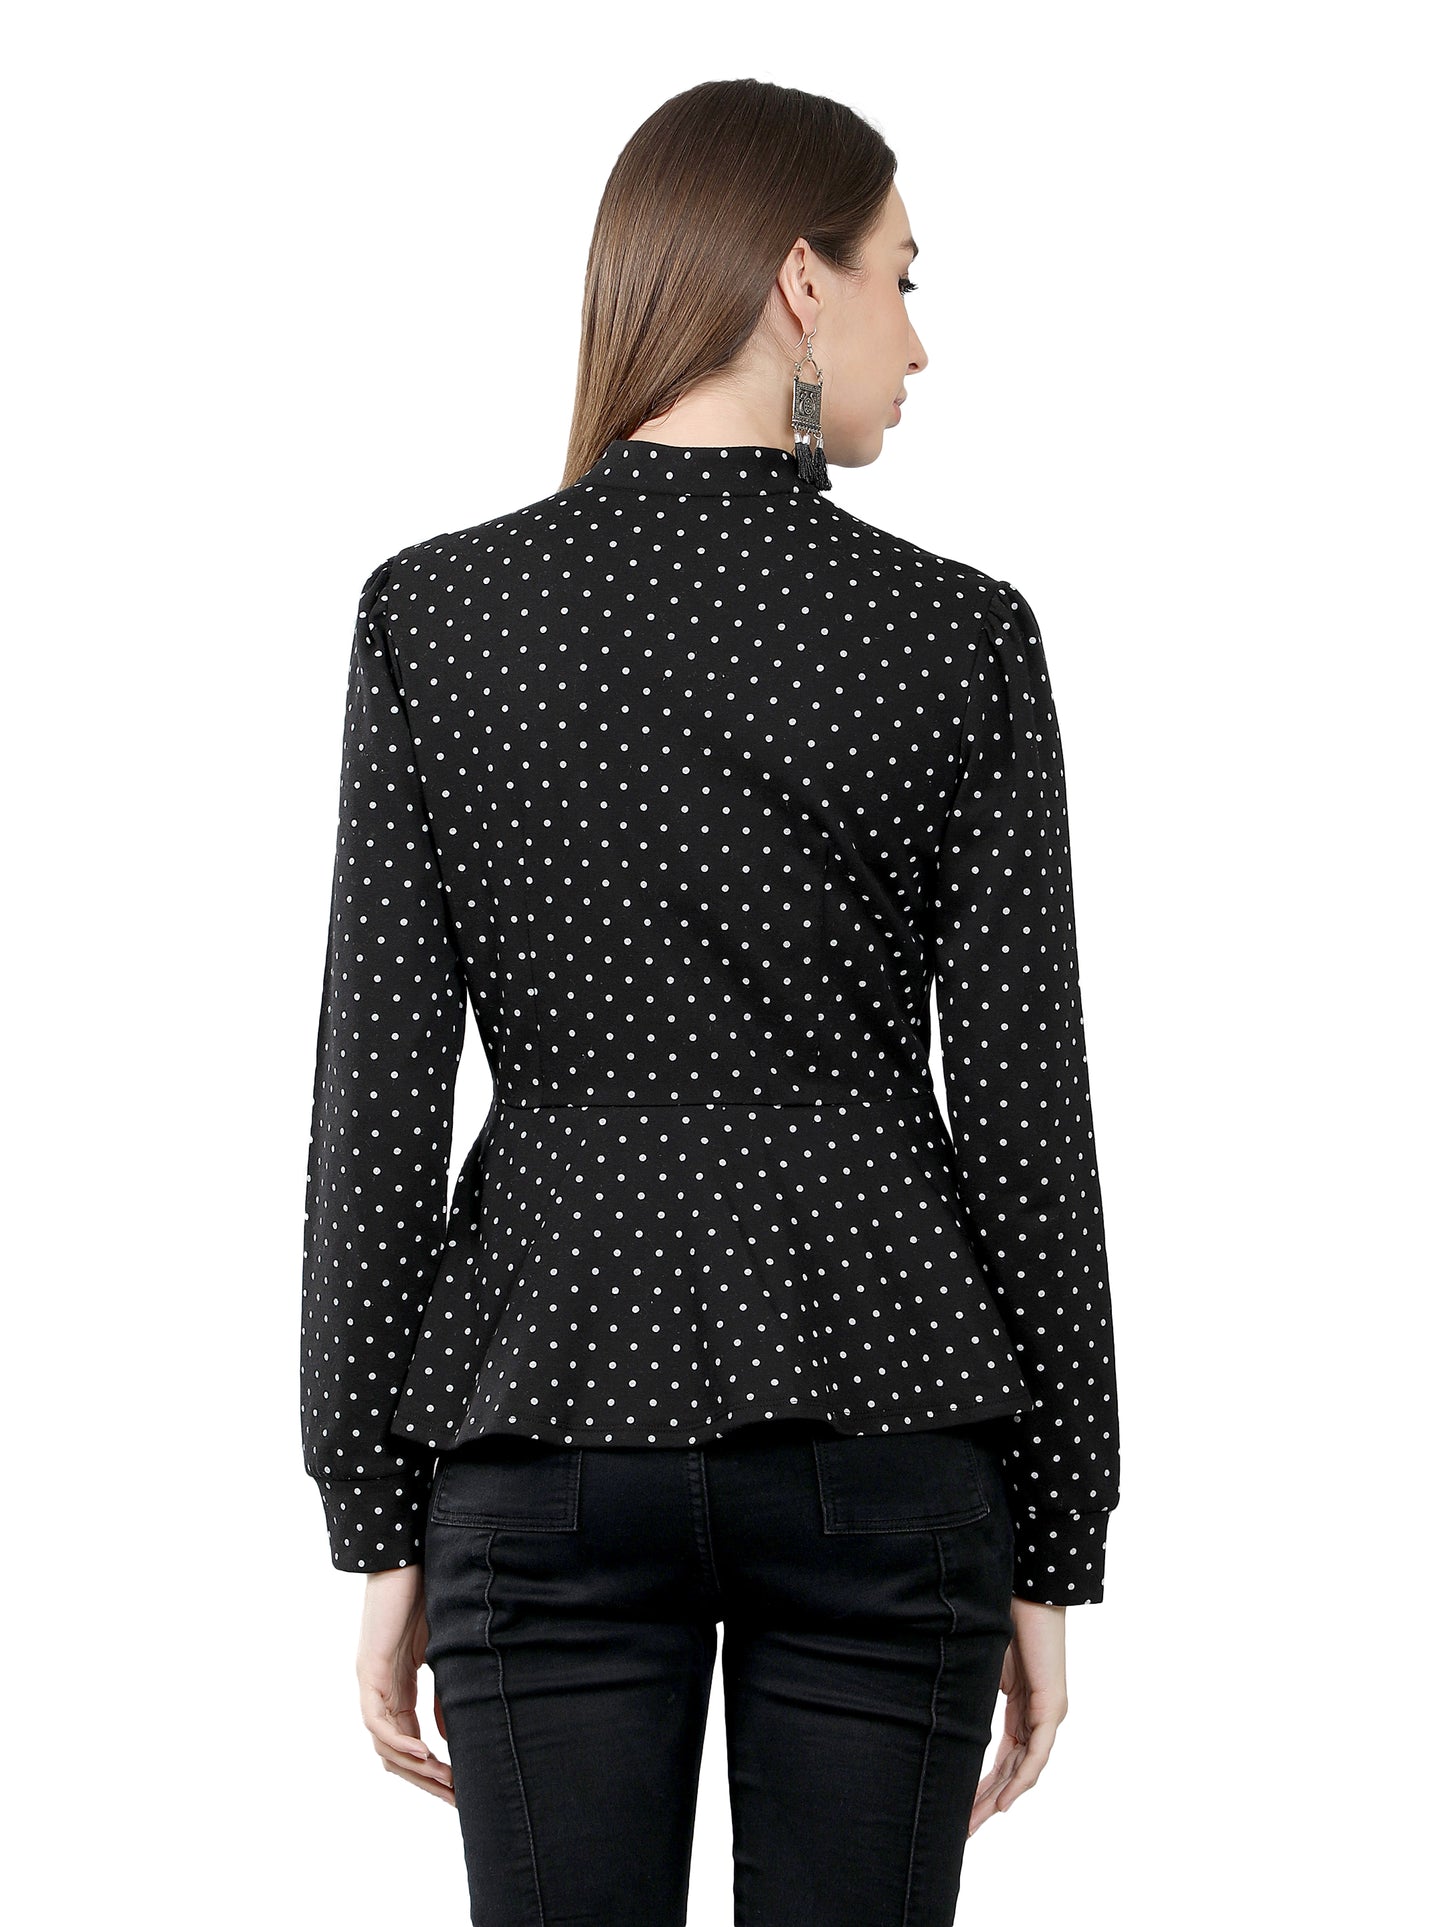 NUEVOSDAMAS Women Polka Dot Printed Peplum Jacket-Black